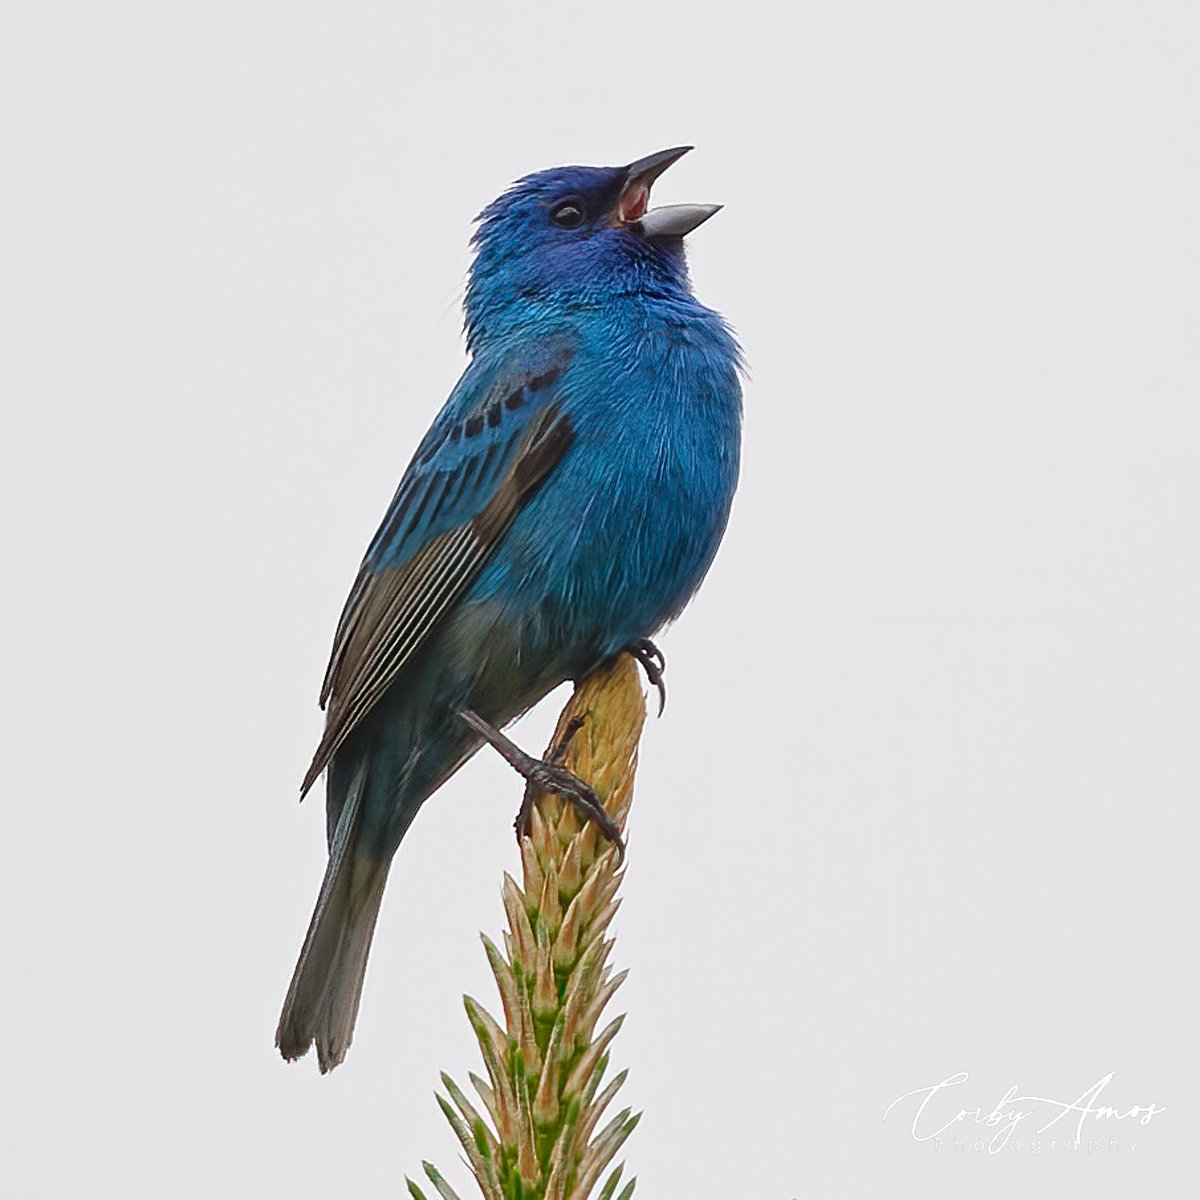 Indigo Bunting
.
linktr.ee/corbyamos
.
#birdphotography #birdwatching #birding #BirdTwitter #twitterbirds #birdpics